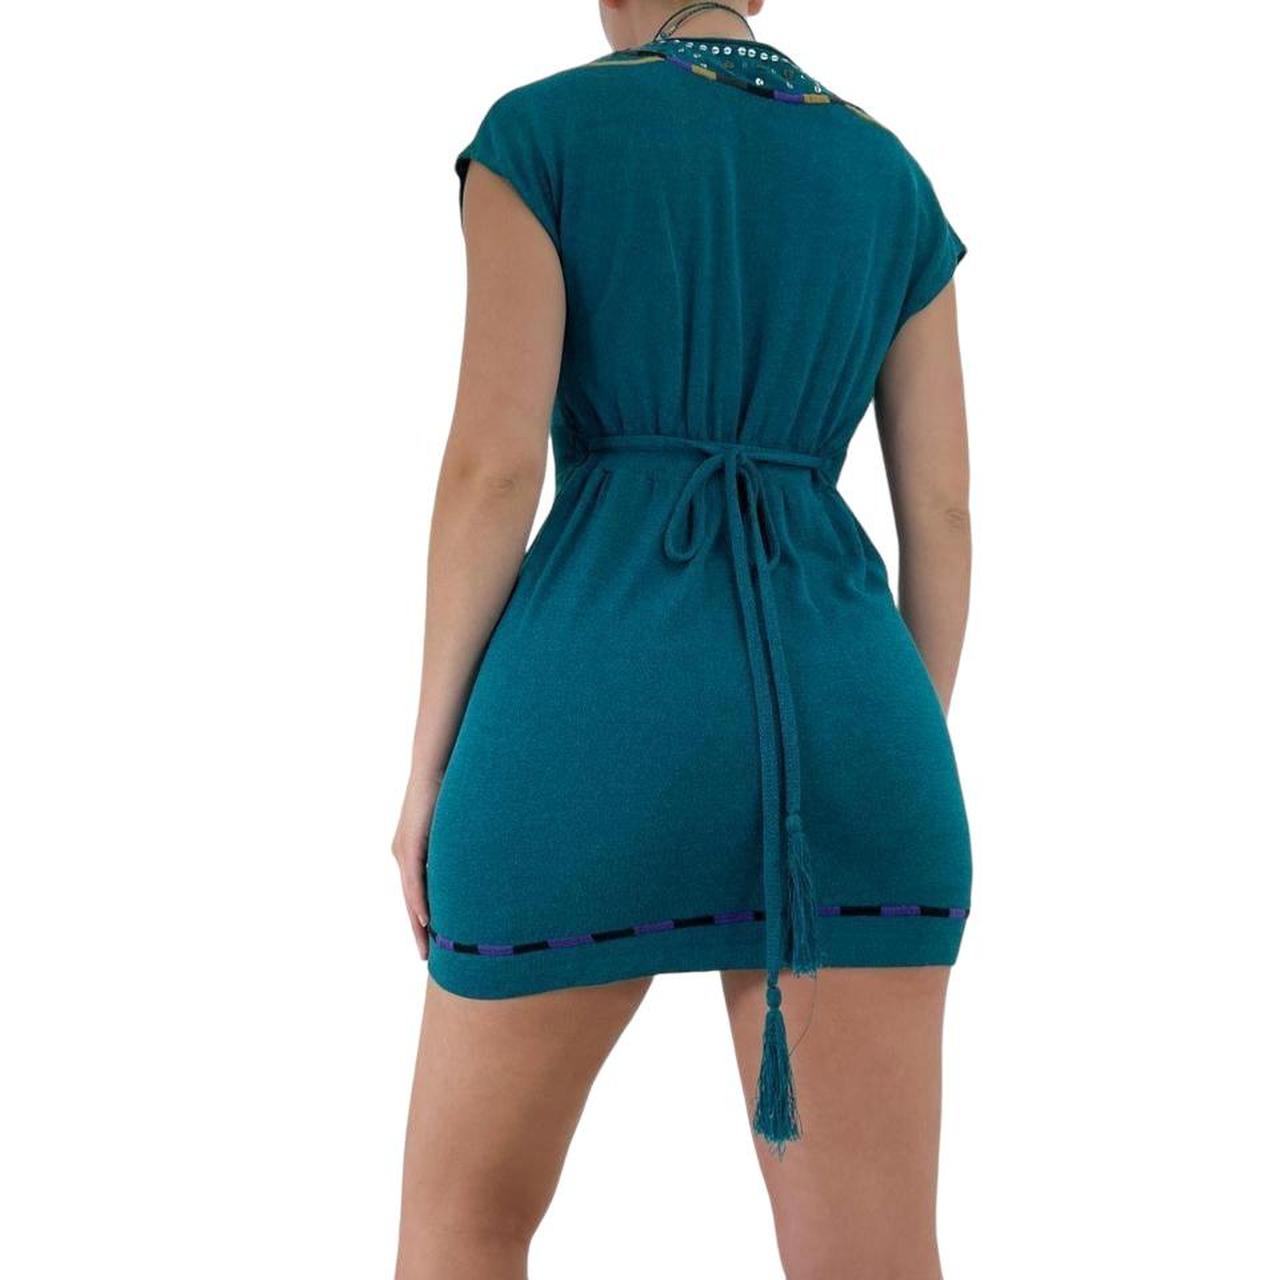 Nanette Leopore Teal Blue Knit Short Sleeve Dress w/ Silver Sequin Details + Tie Back [S]